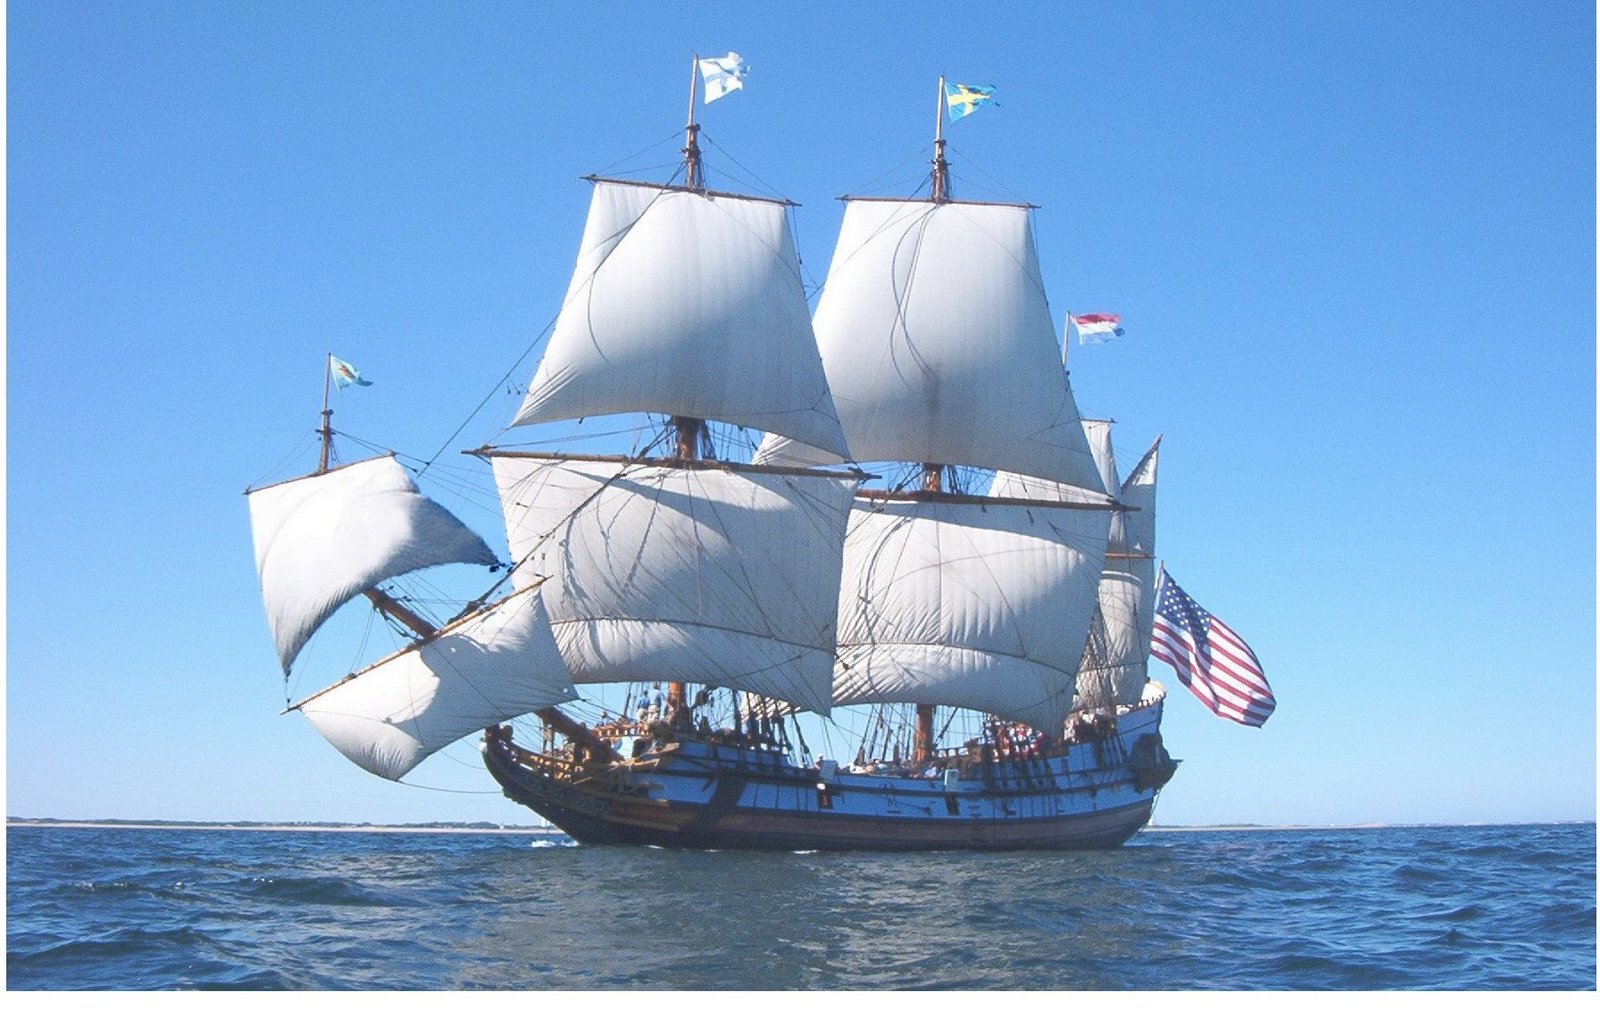 [1.+Ship+Skulda+Britta+Off+the+coast+near+Provincetown,+MA.jpg]